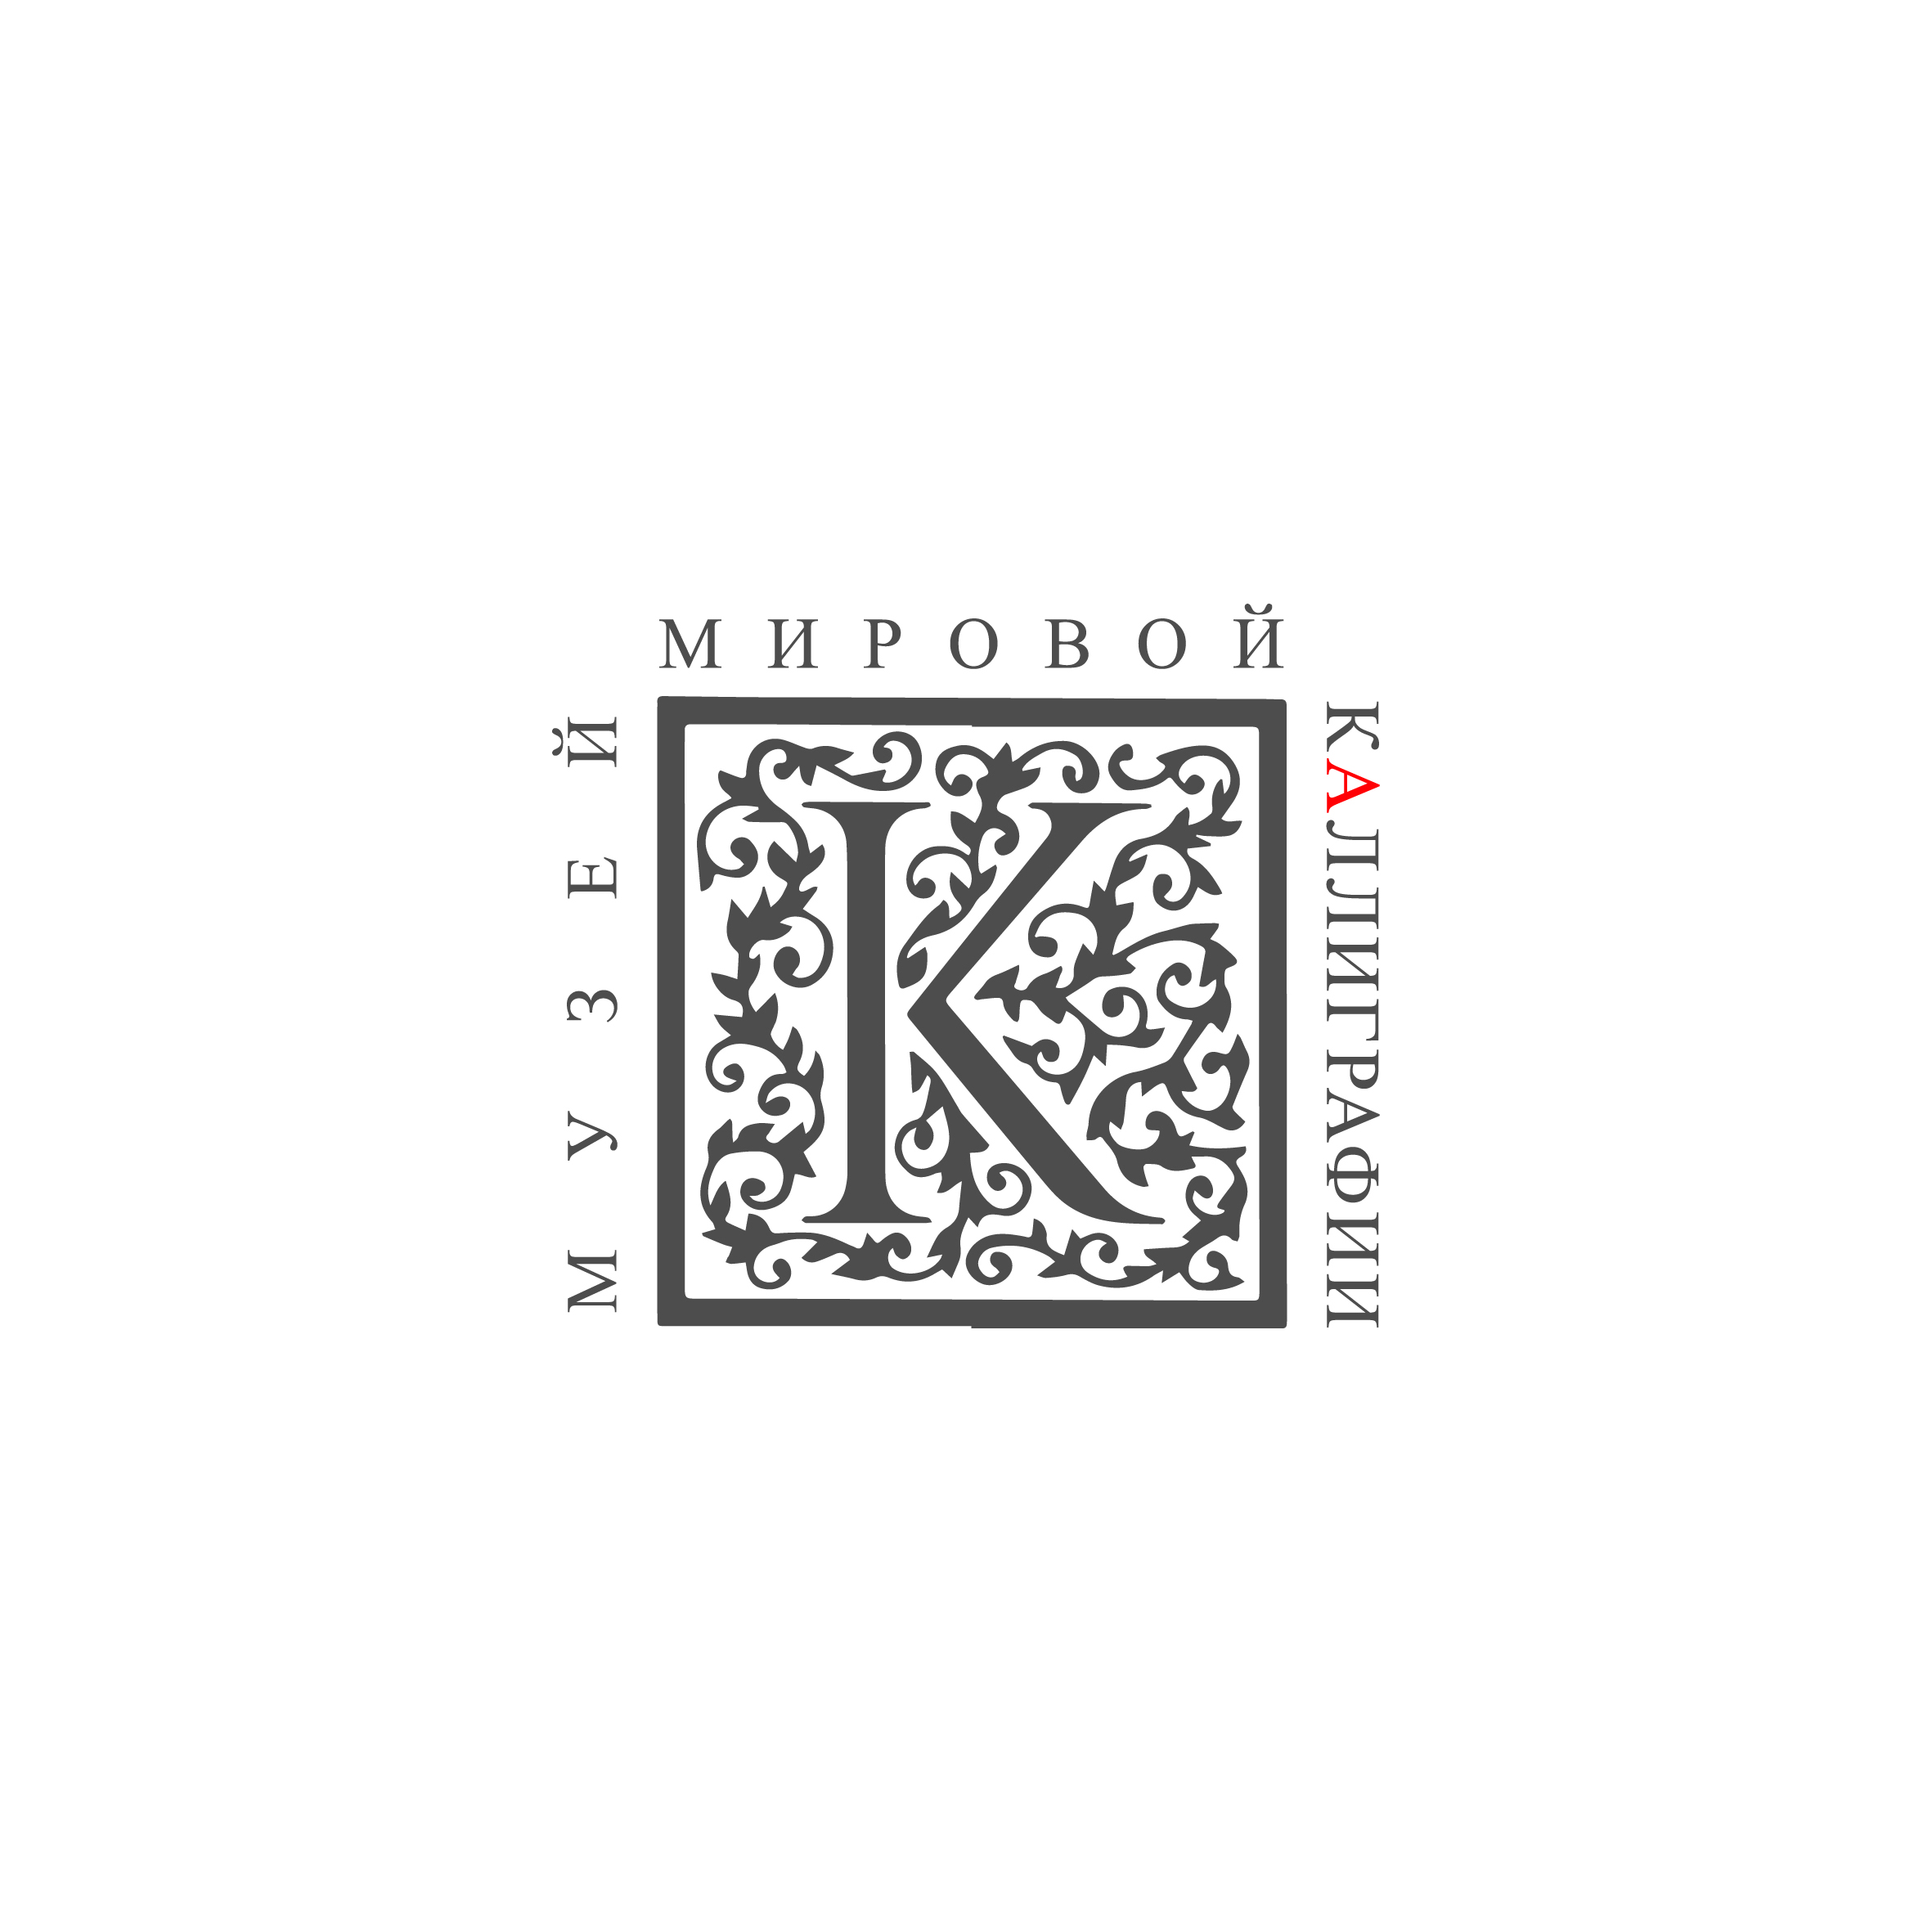 MMK_logo_rus.jpg - 978.54 KB